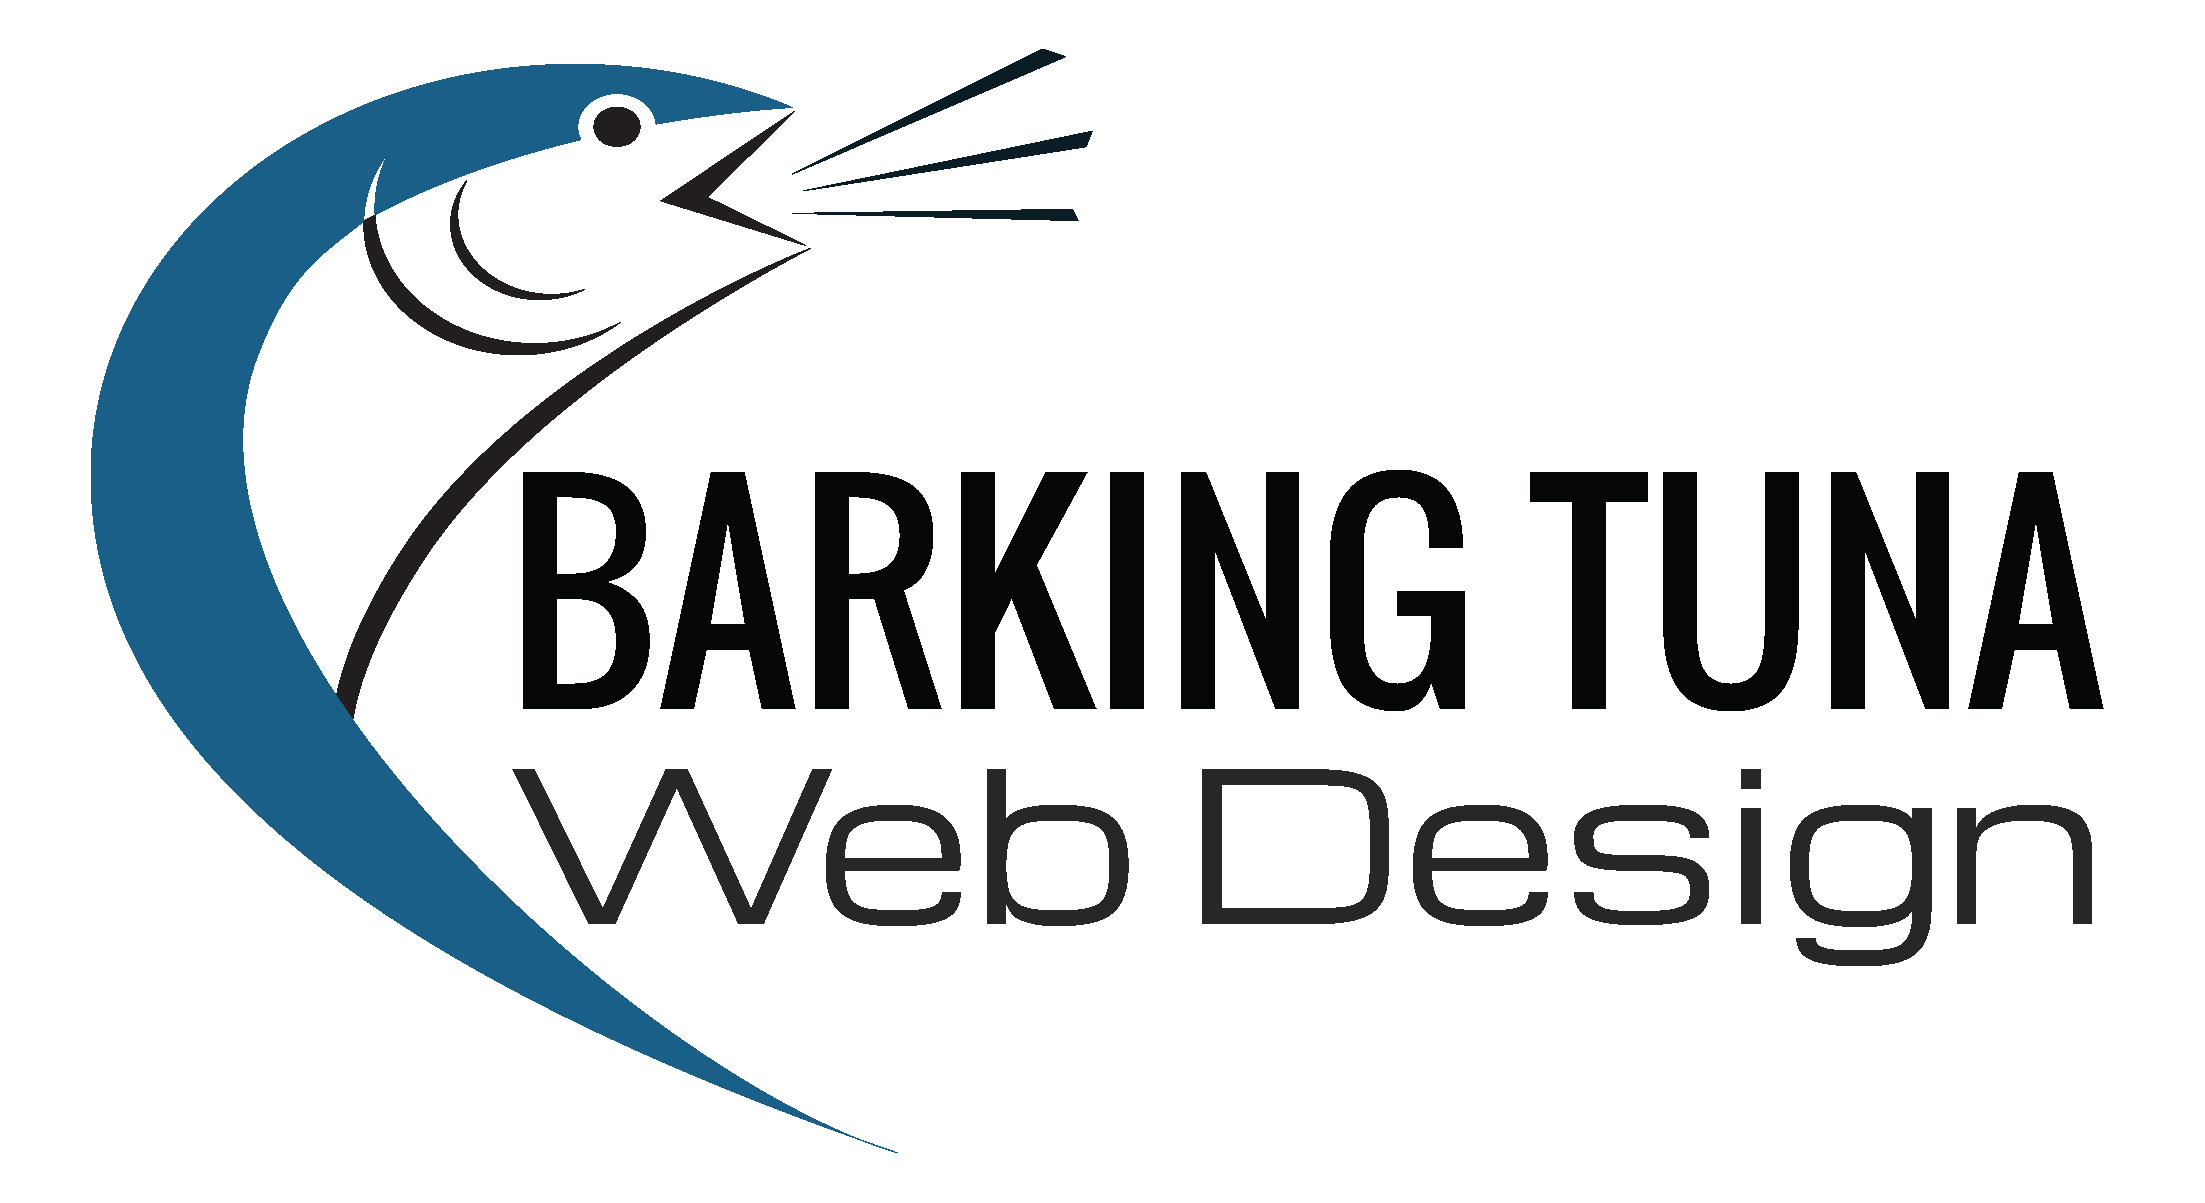 Web Design Services | Small Business Websites | Self Storage Websites | SEO | Phoenix, AZ